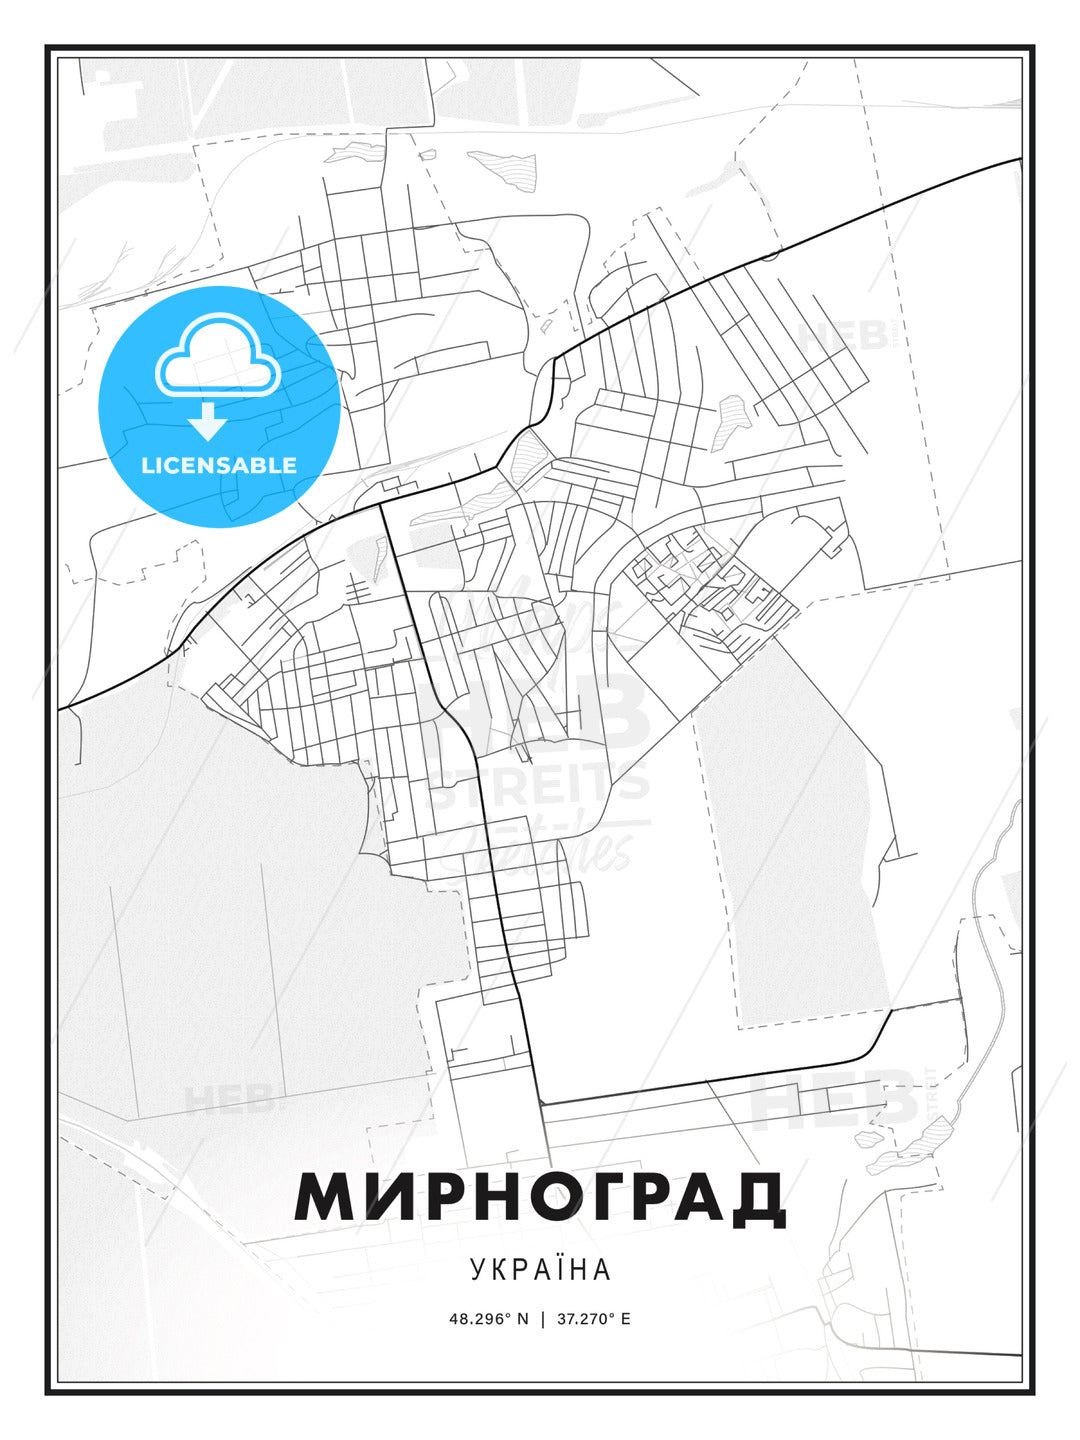 МИРНОГРАД / Myrnohrad, Ukraine, Modern Print Template in Various Formats - HEBSTREITS Sketches